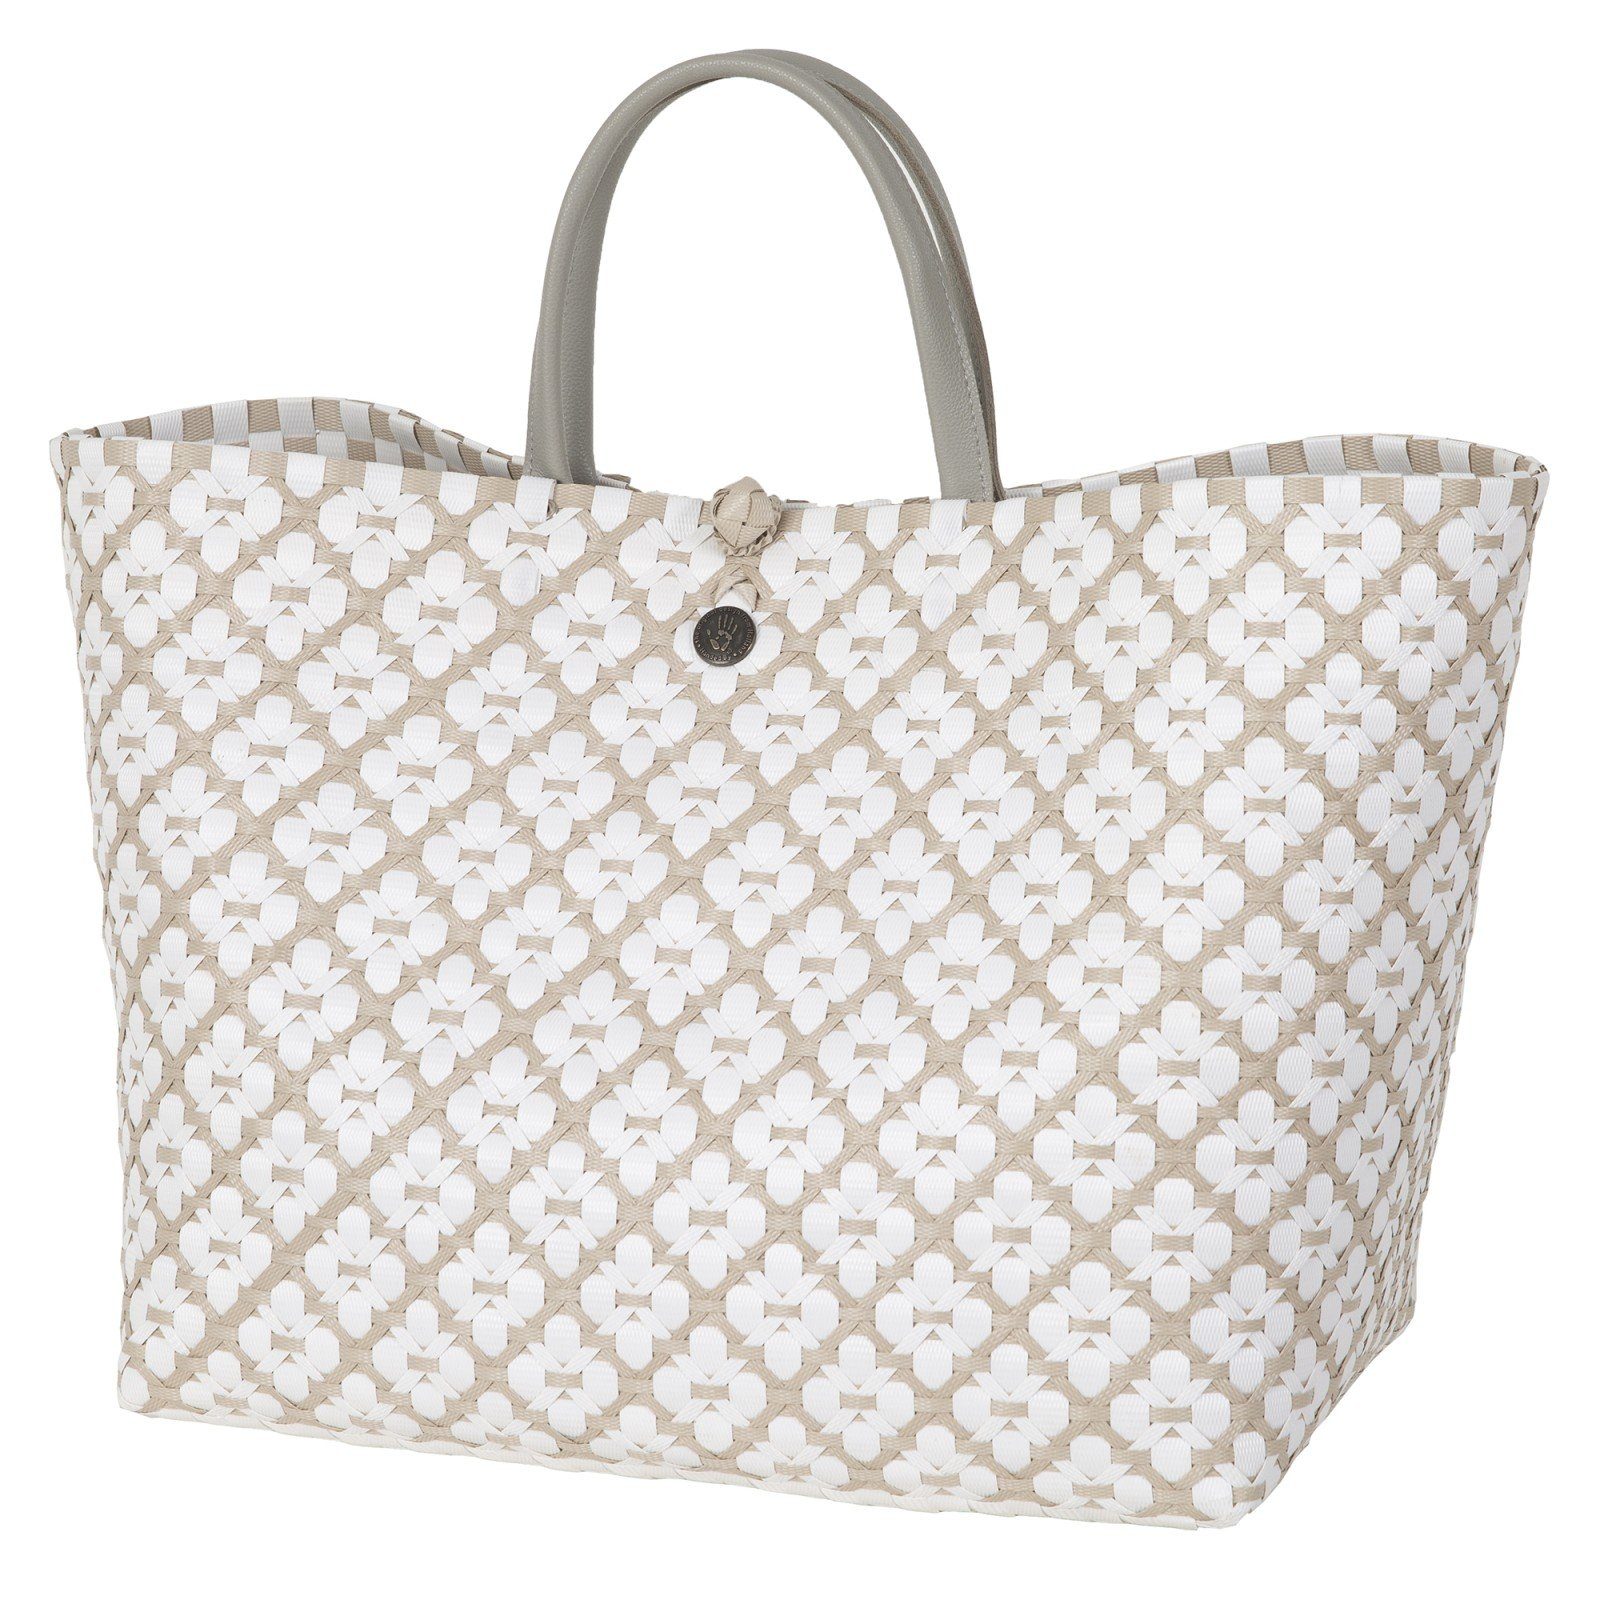 Handed pale-grey Einkaufsshopper By Strandtasche - "Motif Einkauftstasche, Bag" Shopper, Handed By